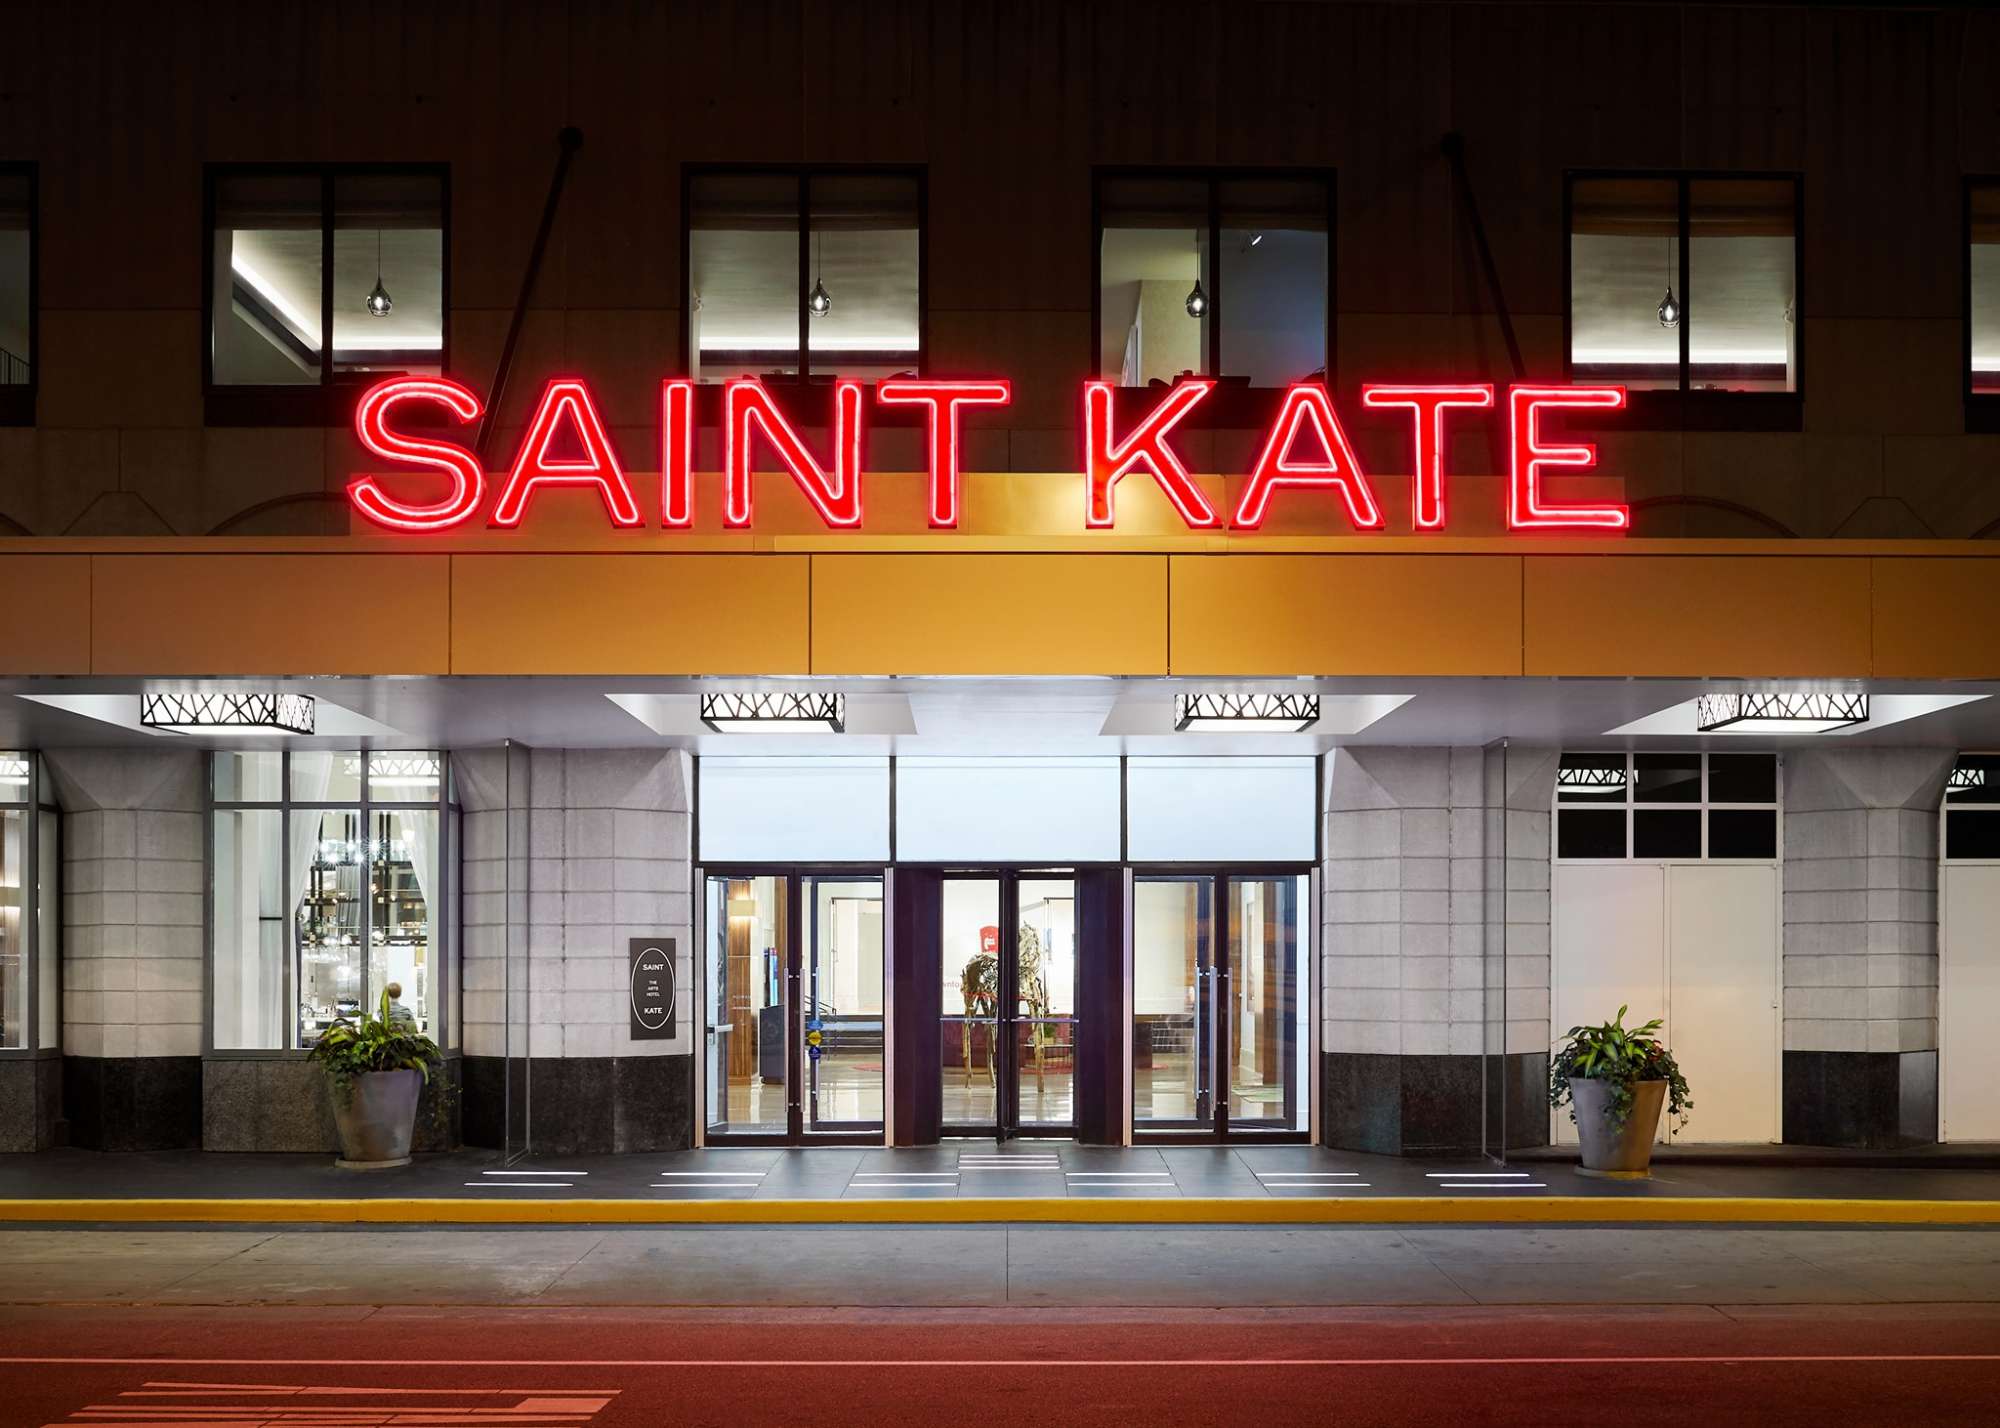 Saint Kate the Arts Hotel in Milwauke, WI.